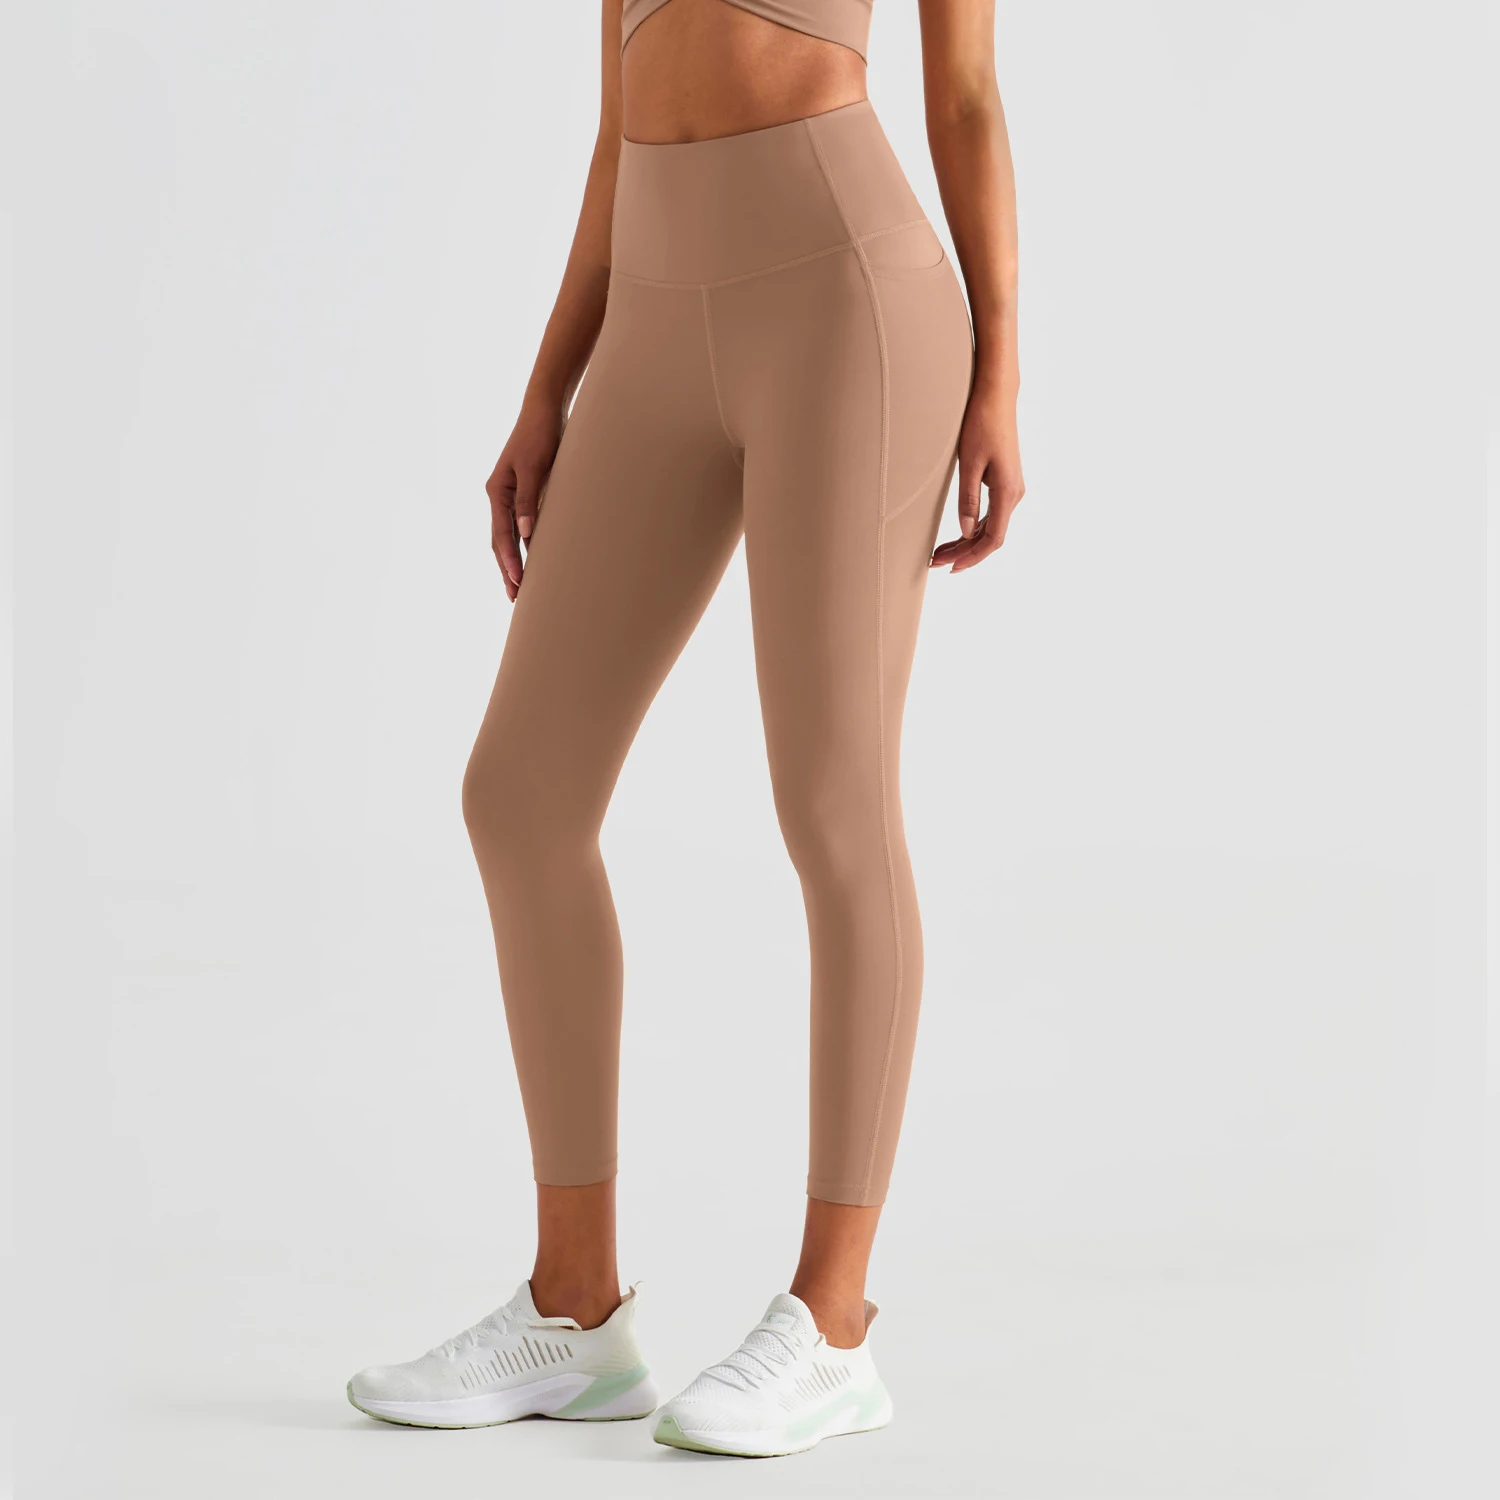 YIYI High Waist Lulu Tummy Control Leggings Women Naked Feeling No See Through Gym Tights Pants Fitness Leggings With Pockets